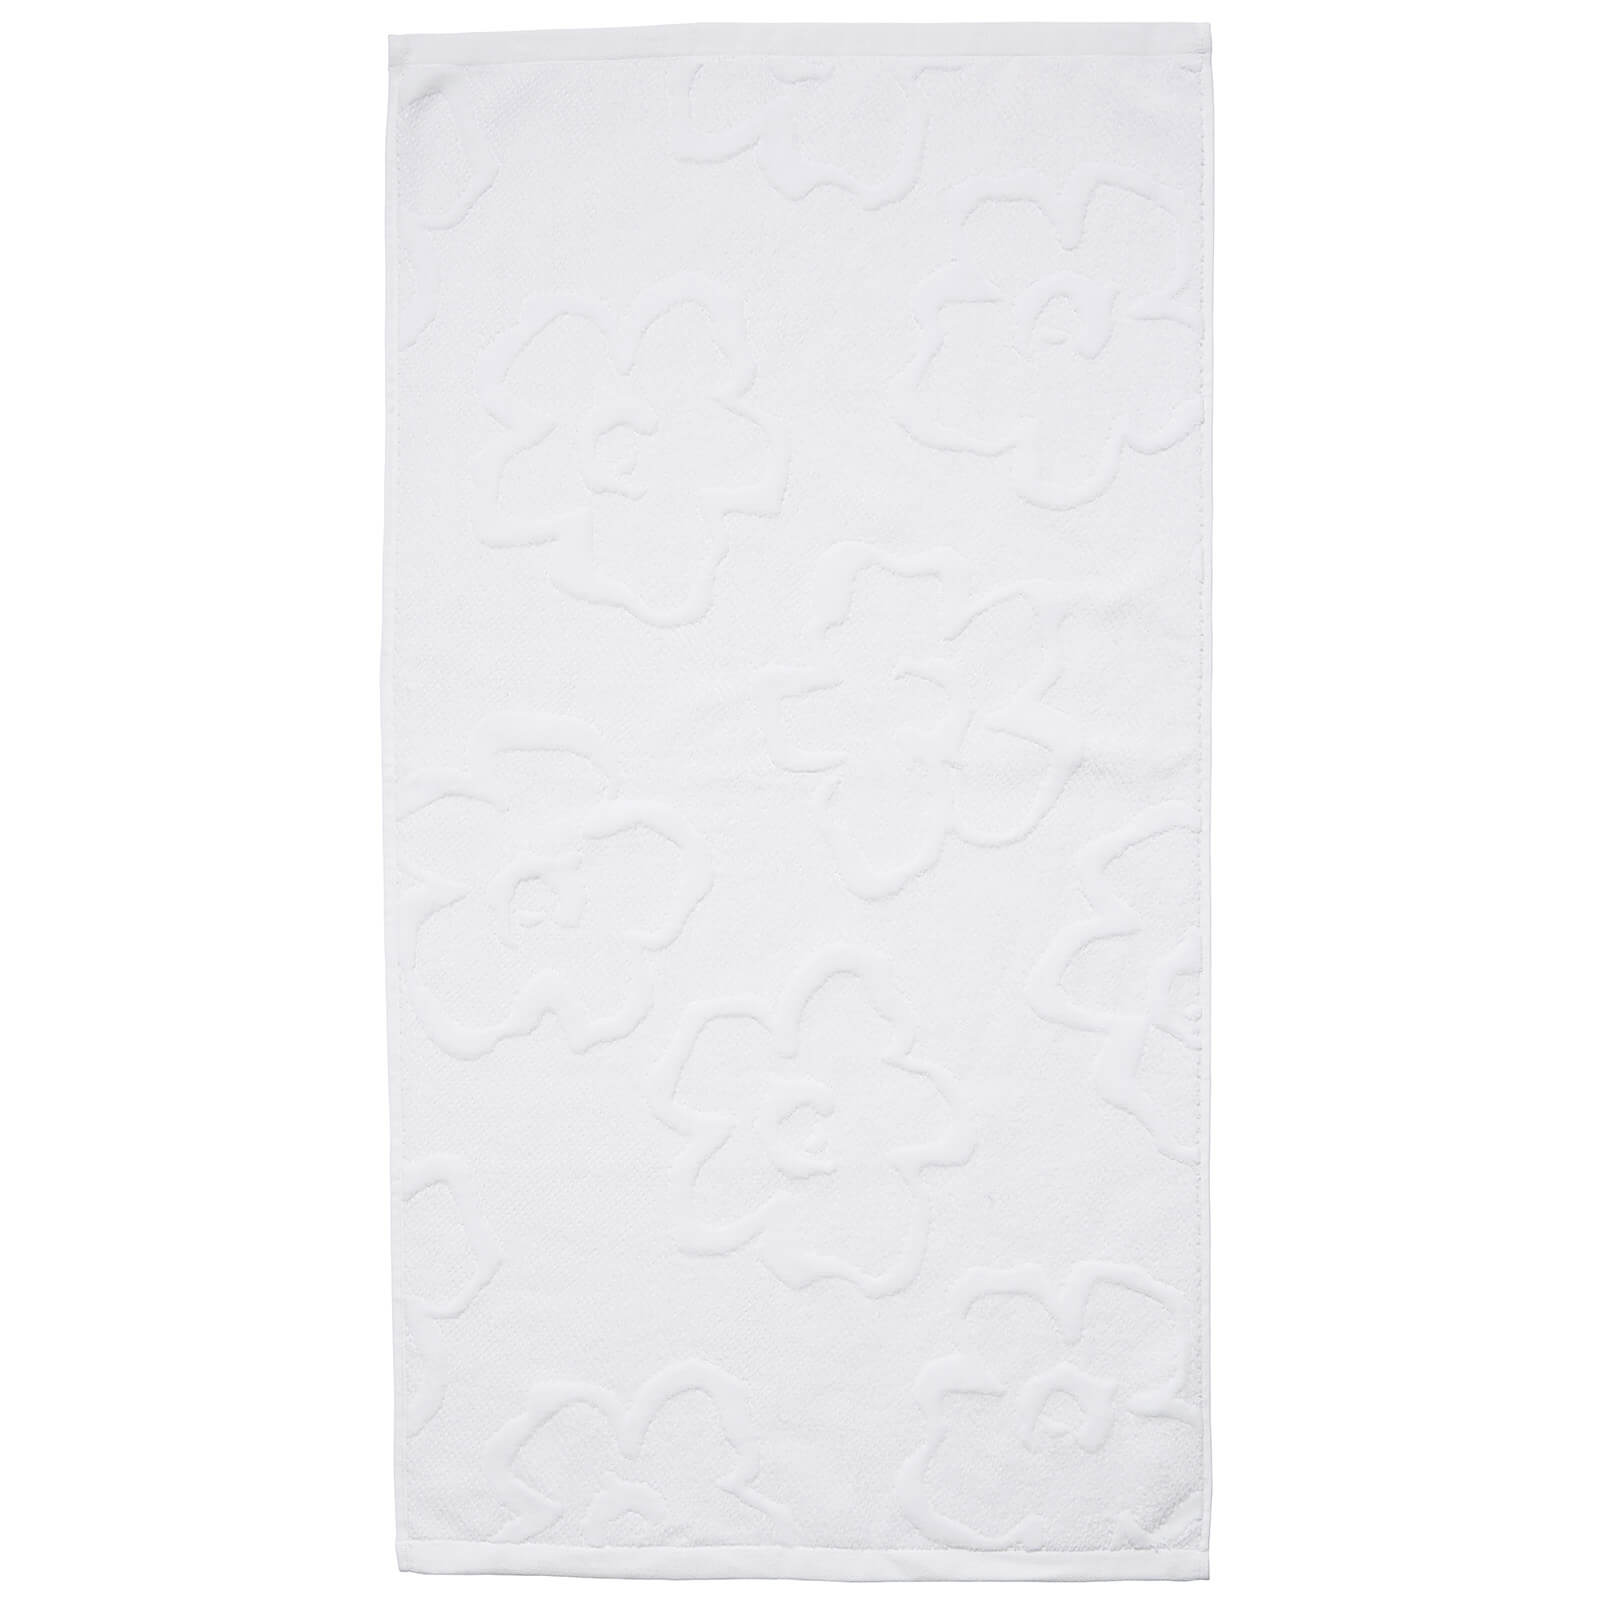 Ted Baker Magnolia Towel - White - Großes Badetuch von Ted Baker